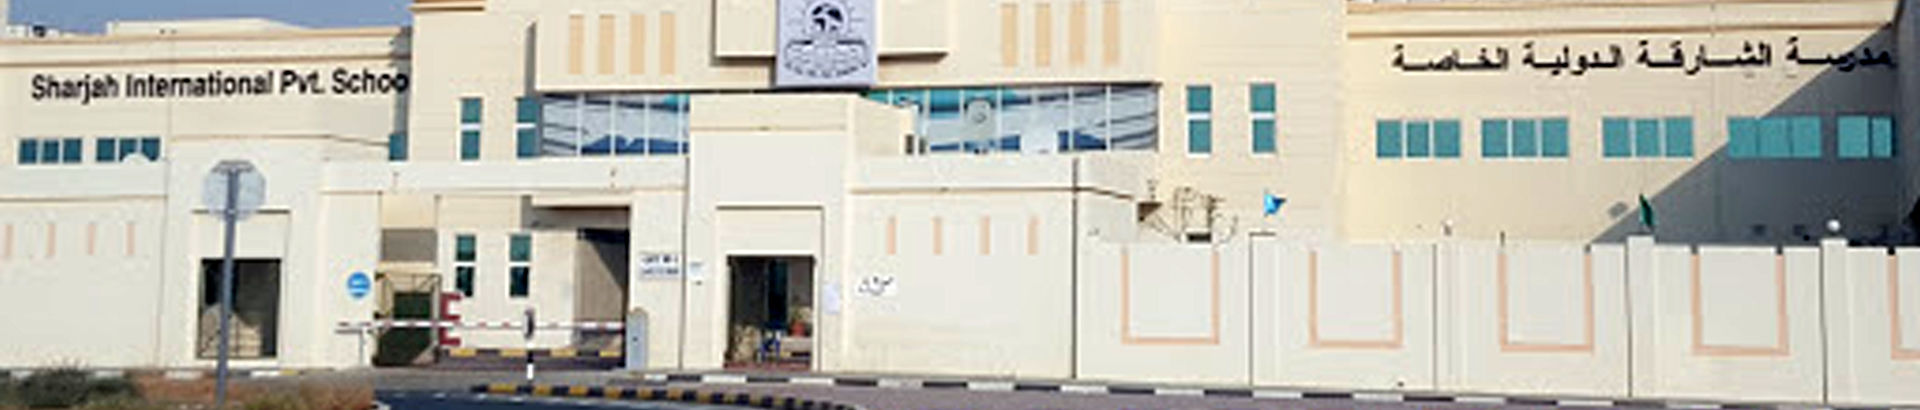 Sharjah International Private School-edcare.ae